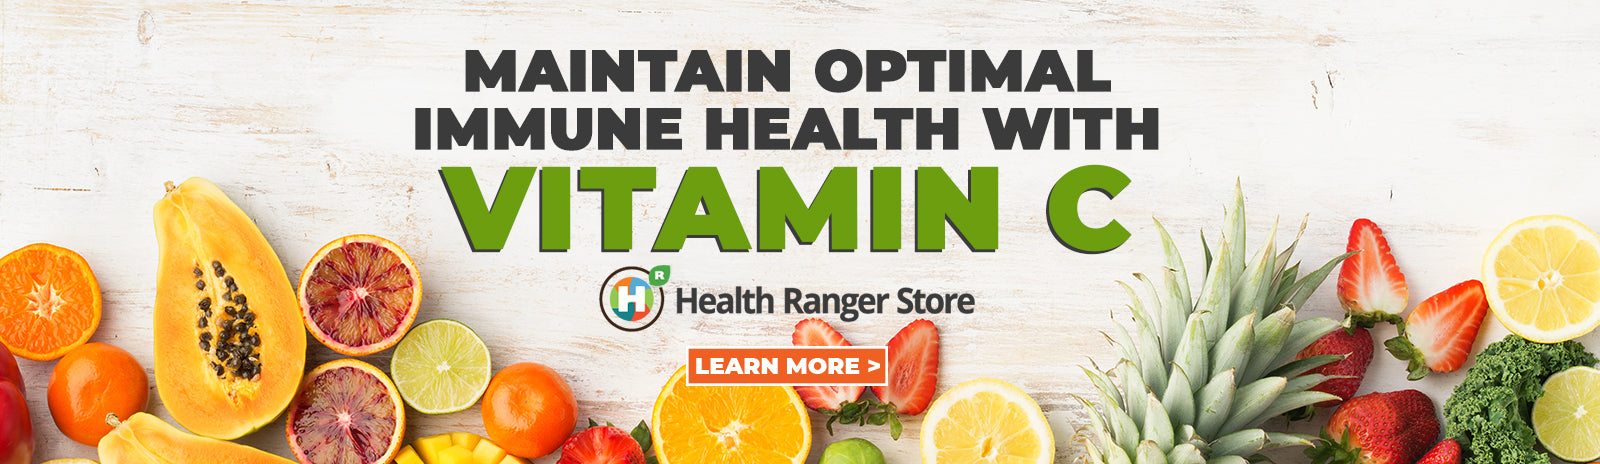 Maintain optimal immune health with vitamin C